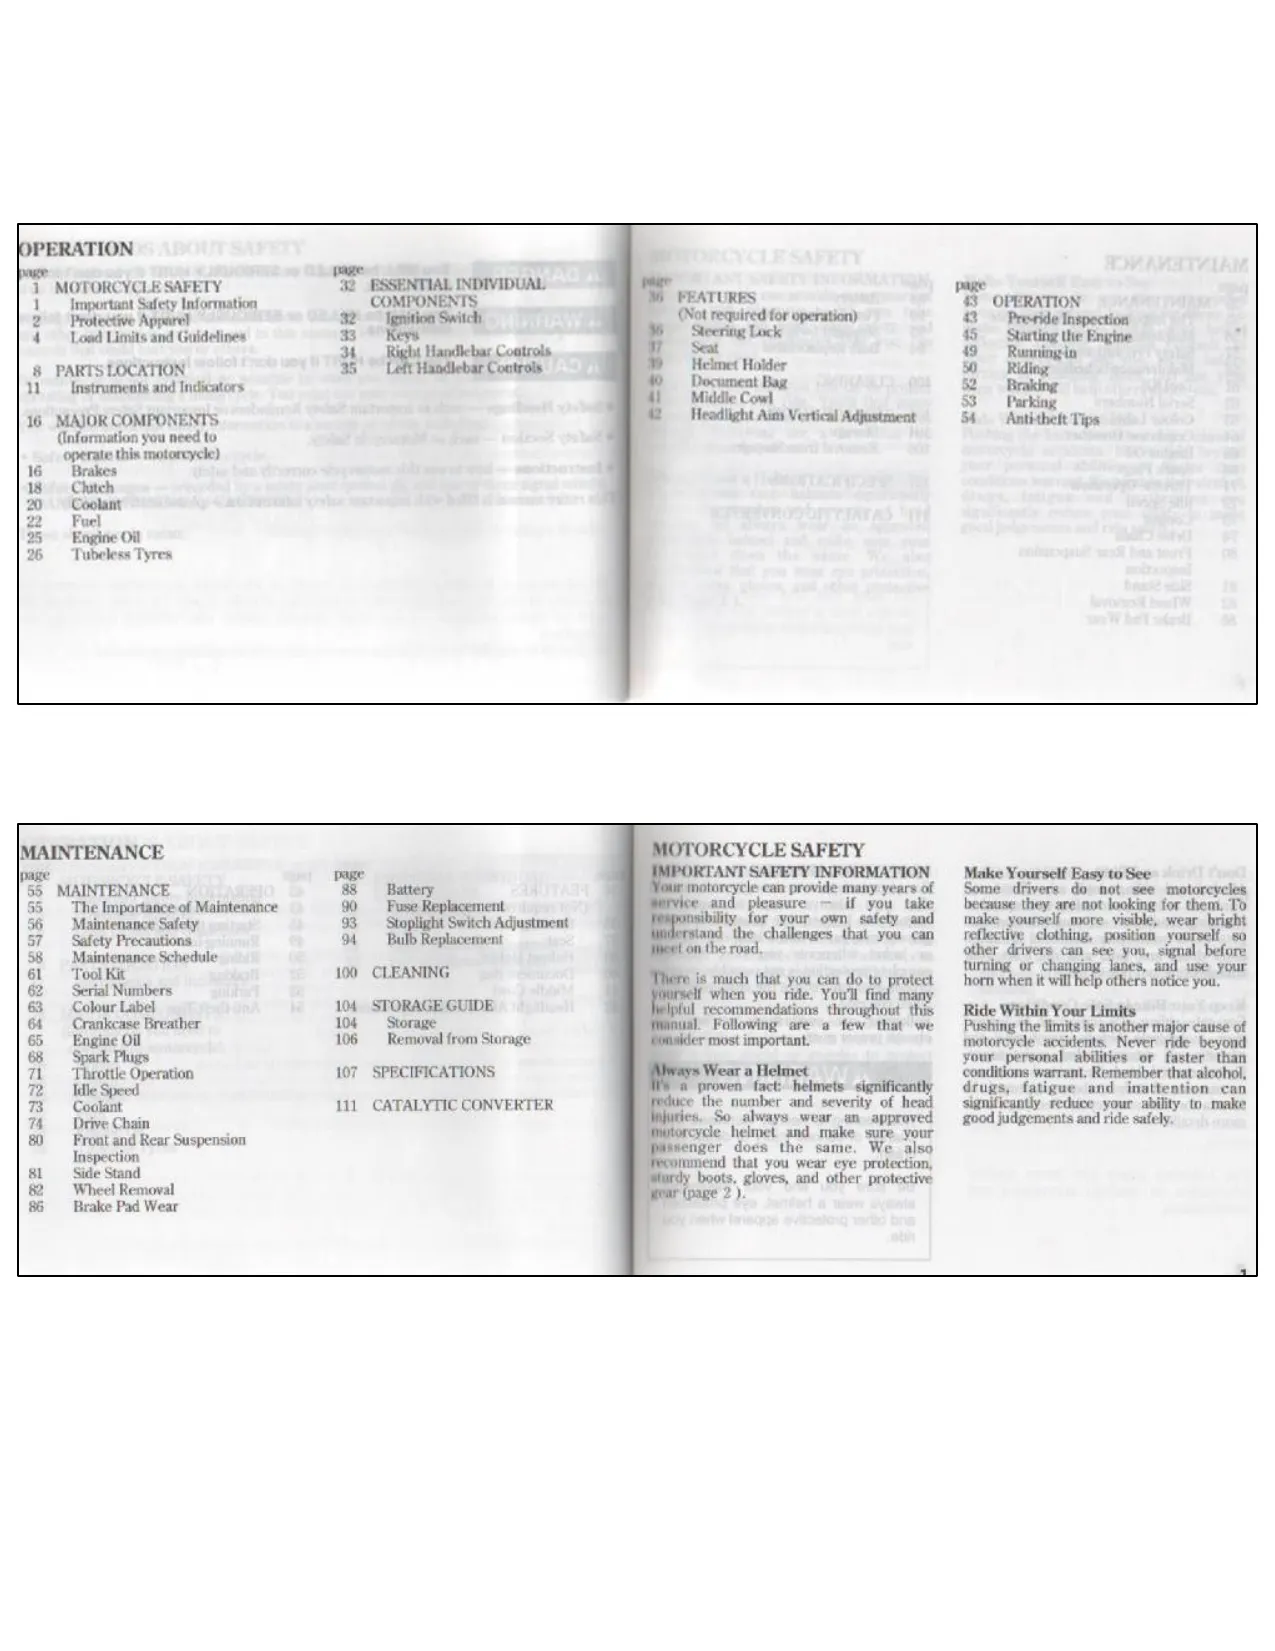 Honda CBR125R owners manual Preview image 4